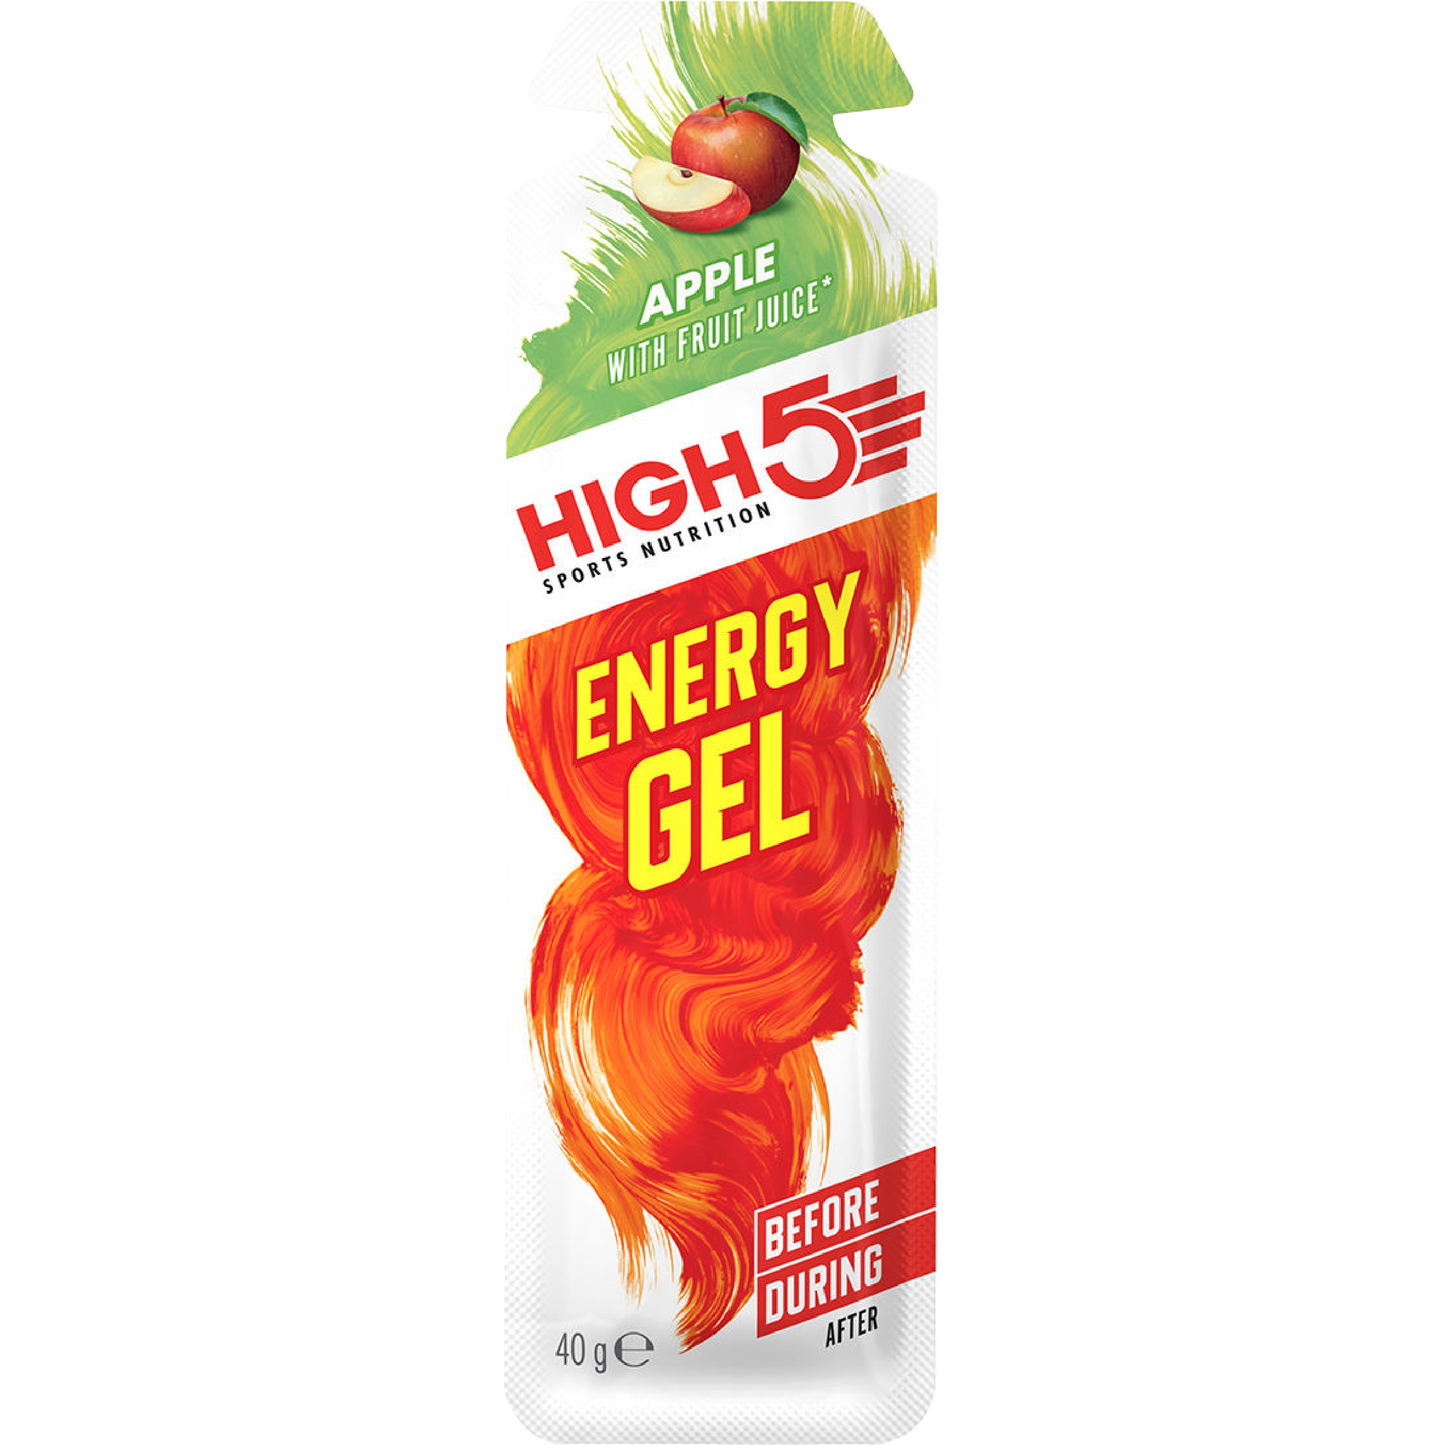 High 5 Energy Gel *Clearance Pack*